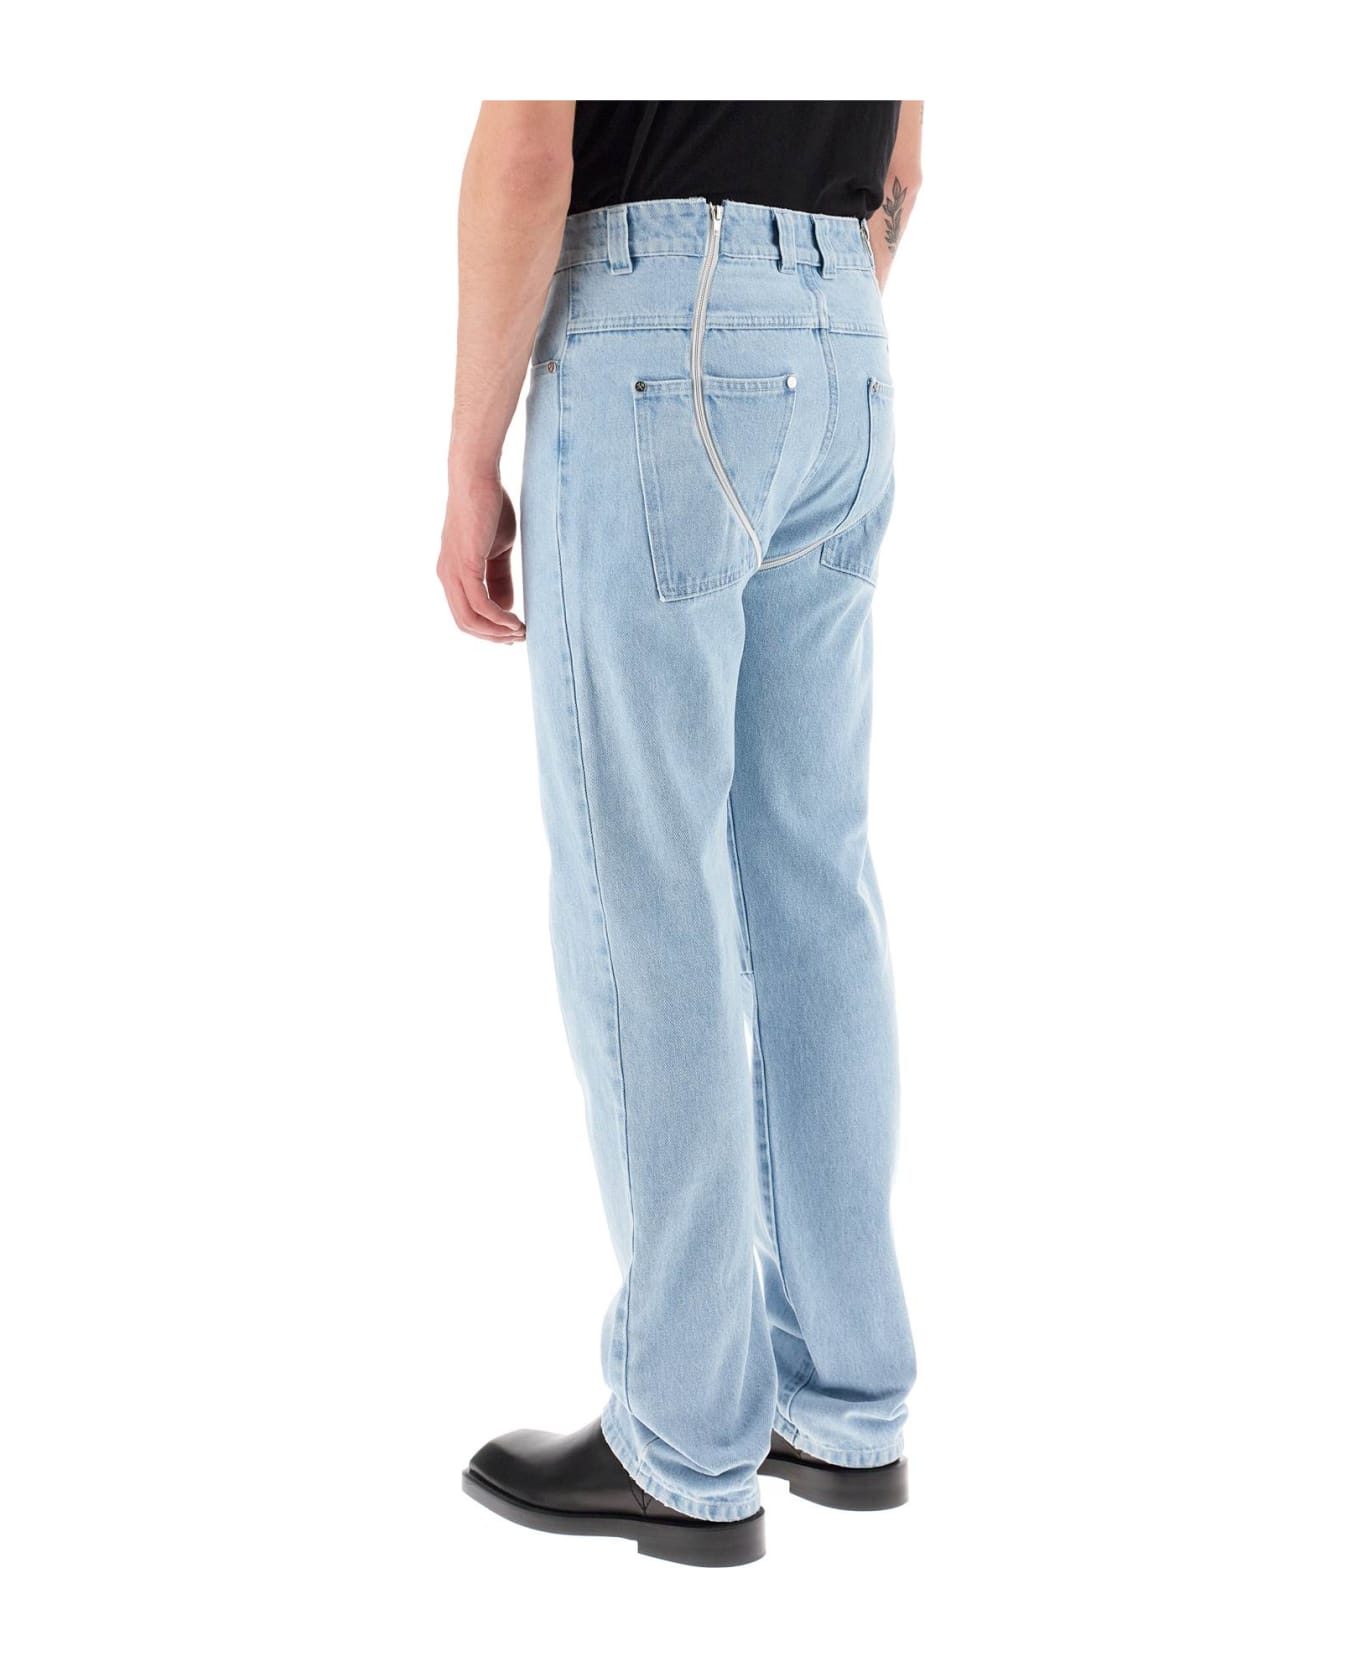 GMBH Straight Leg Jeans With Double Zipper - LIGHT INDIGO BLUE (Light blue)